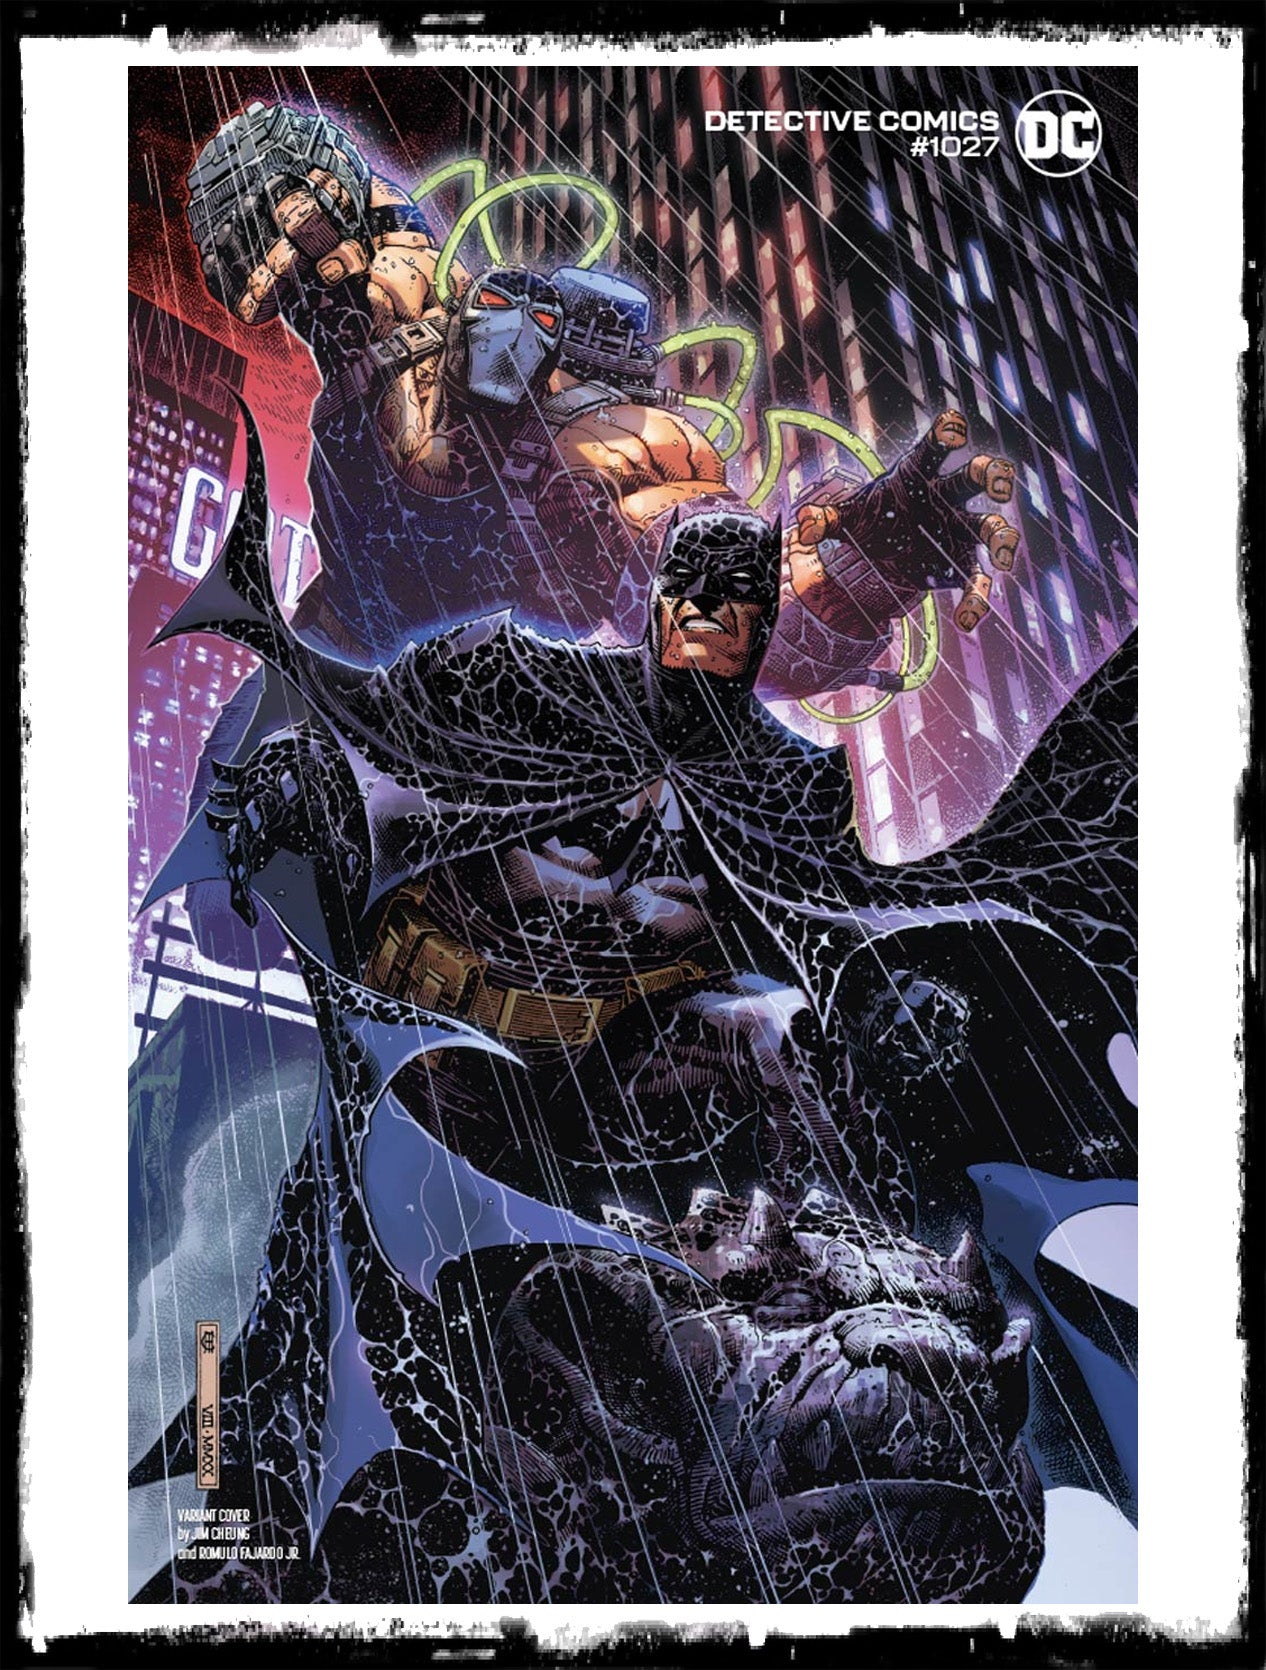 DETECTIVE COMICS - #1027 JIM CHEUNG BATMAN & BANE COVER (2020 - NM)